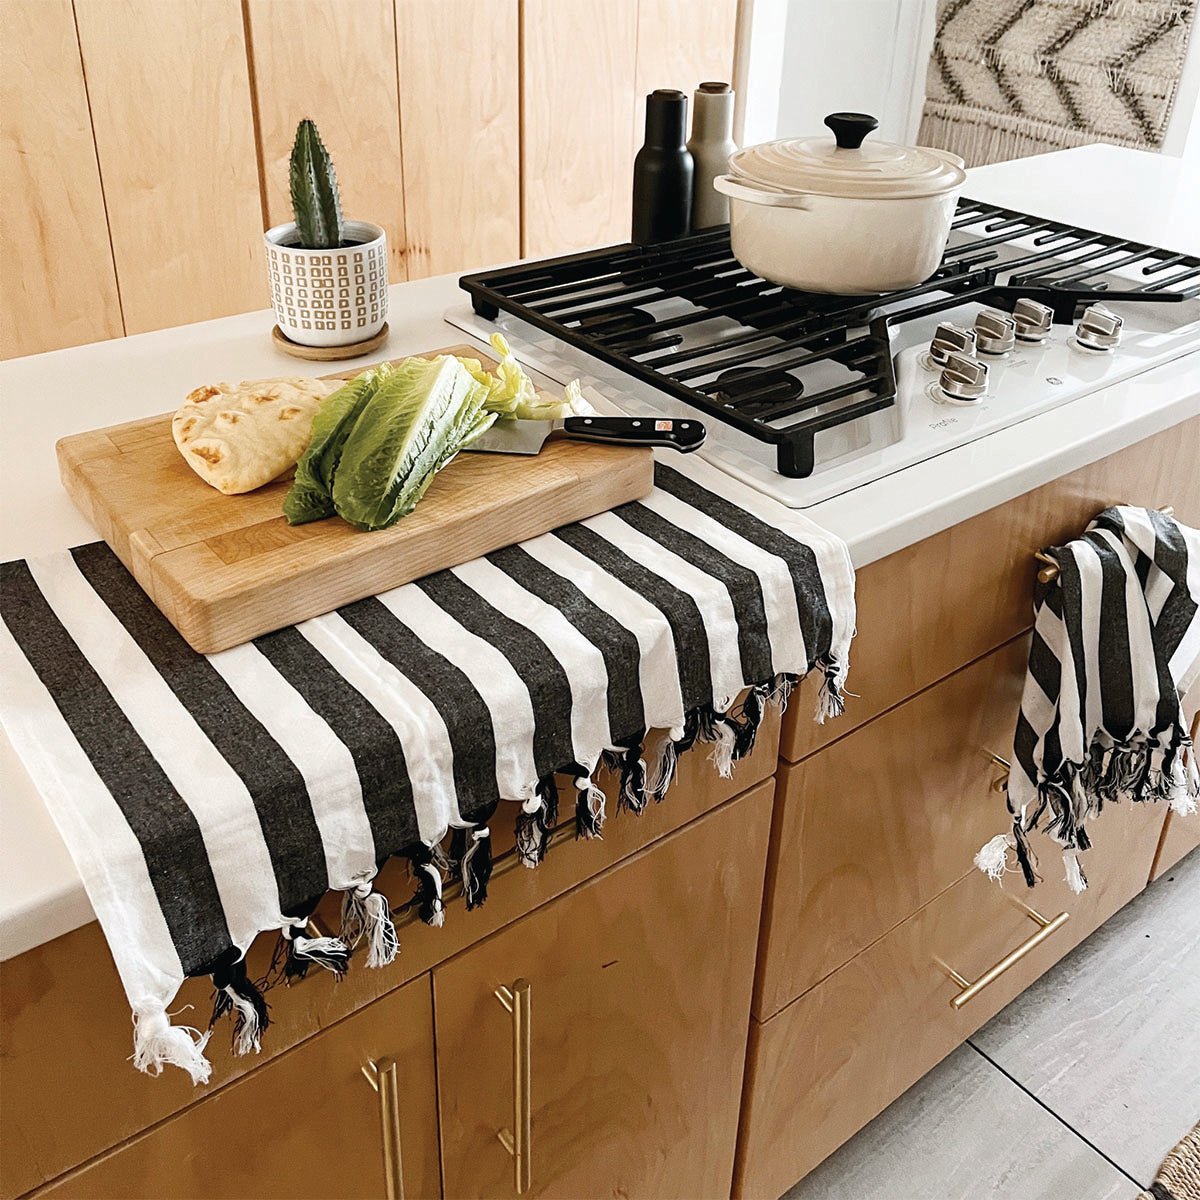 Carrara Cotton Kitchen Towel – Slowtide